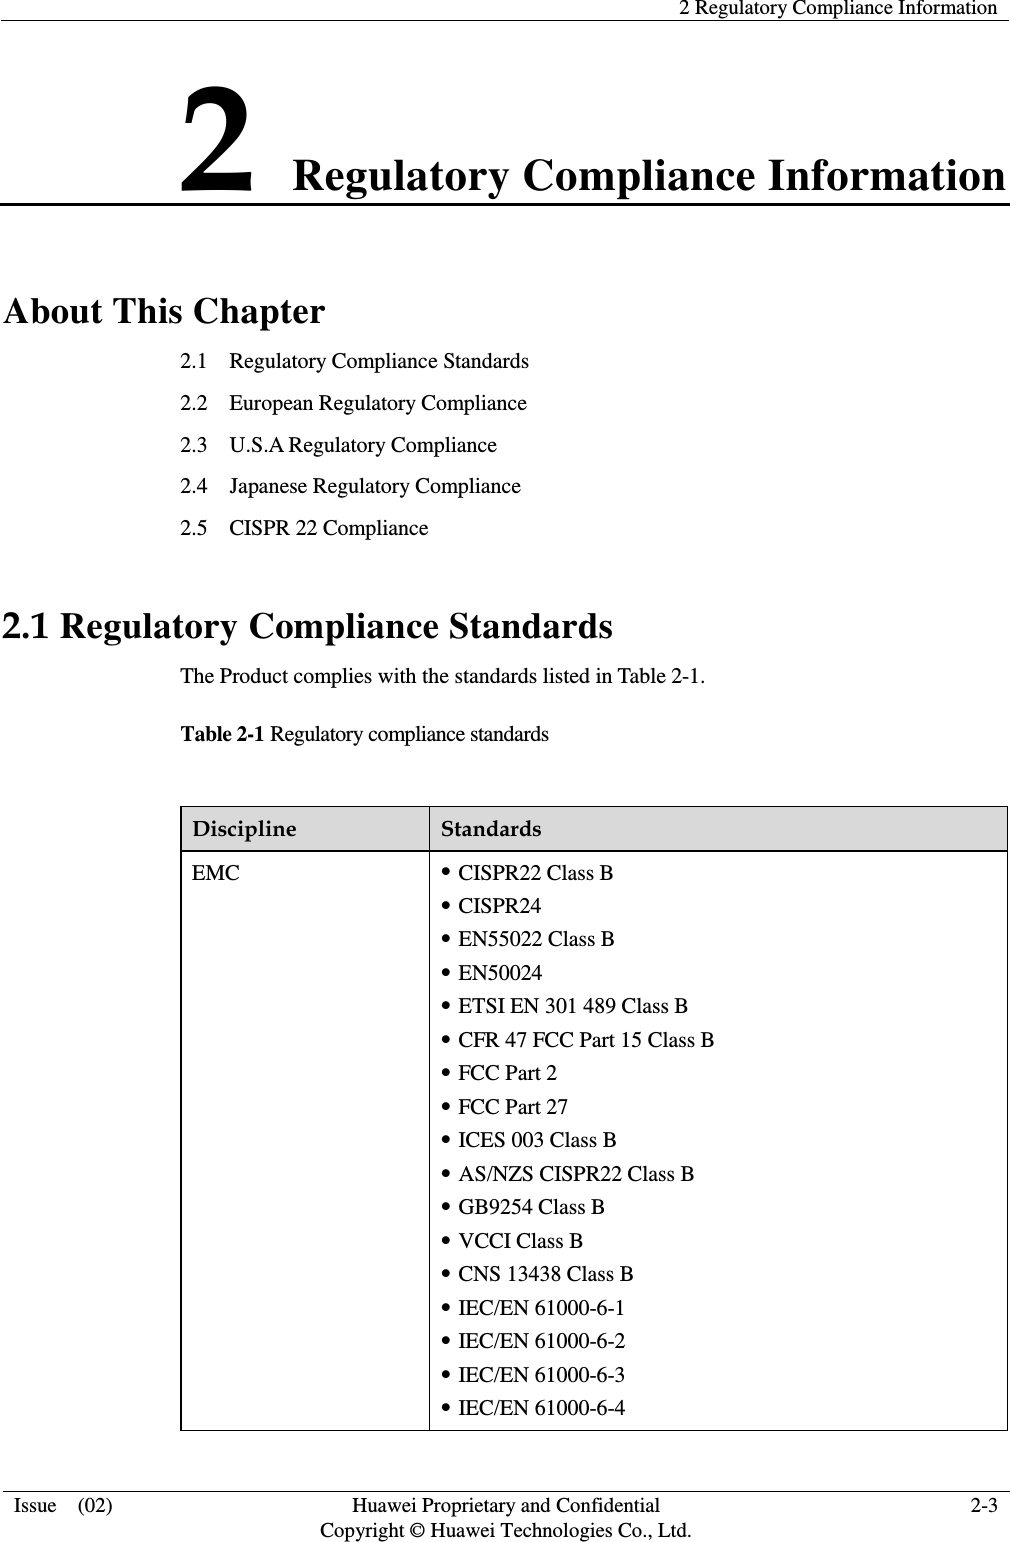   2 Regulatory Compliance Information  Issue    (02) Huawei Proprietary and Confidential         Copyright © Huawei Technologies Co., Ltd. 2-3  2 Regulatory Compliance Information About This Chapter 2.1    Regulatory Compliance Standards 2.2    European Regulatory Compliance 2.3    U.S.A Regulatory Compliance 2.4    Japanese Regulatory Compliance 2.5    CISPR 22 Compliance 2.1 Regulatory Compliance Standards The Product complies with the standards listed in Table 2-1. Table 2-1 Regulatory compliance standards  Discipline Standards EMC  CISPR22 Class B  CISPR24  EN55022 Class B  EN50024  ETSI EN 301 489 Class B  CFR 47 FCC Part 15 Class B  FCC Part 2  FCC Part 27  ICES 003 Class B  AS/NZS CISPR22 Class B  GB9254 Class B  VCCI Class B  CNS 13438 Class B  IEC/EN 61000-6-1  IEC/EN 61000-6-2  IEC/EN 61000-6-3  IEC/EN 61000-6-4 